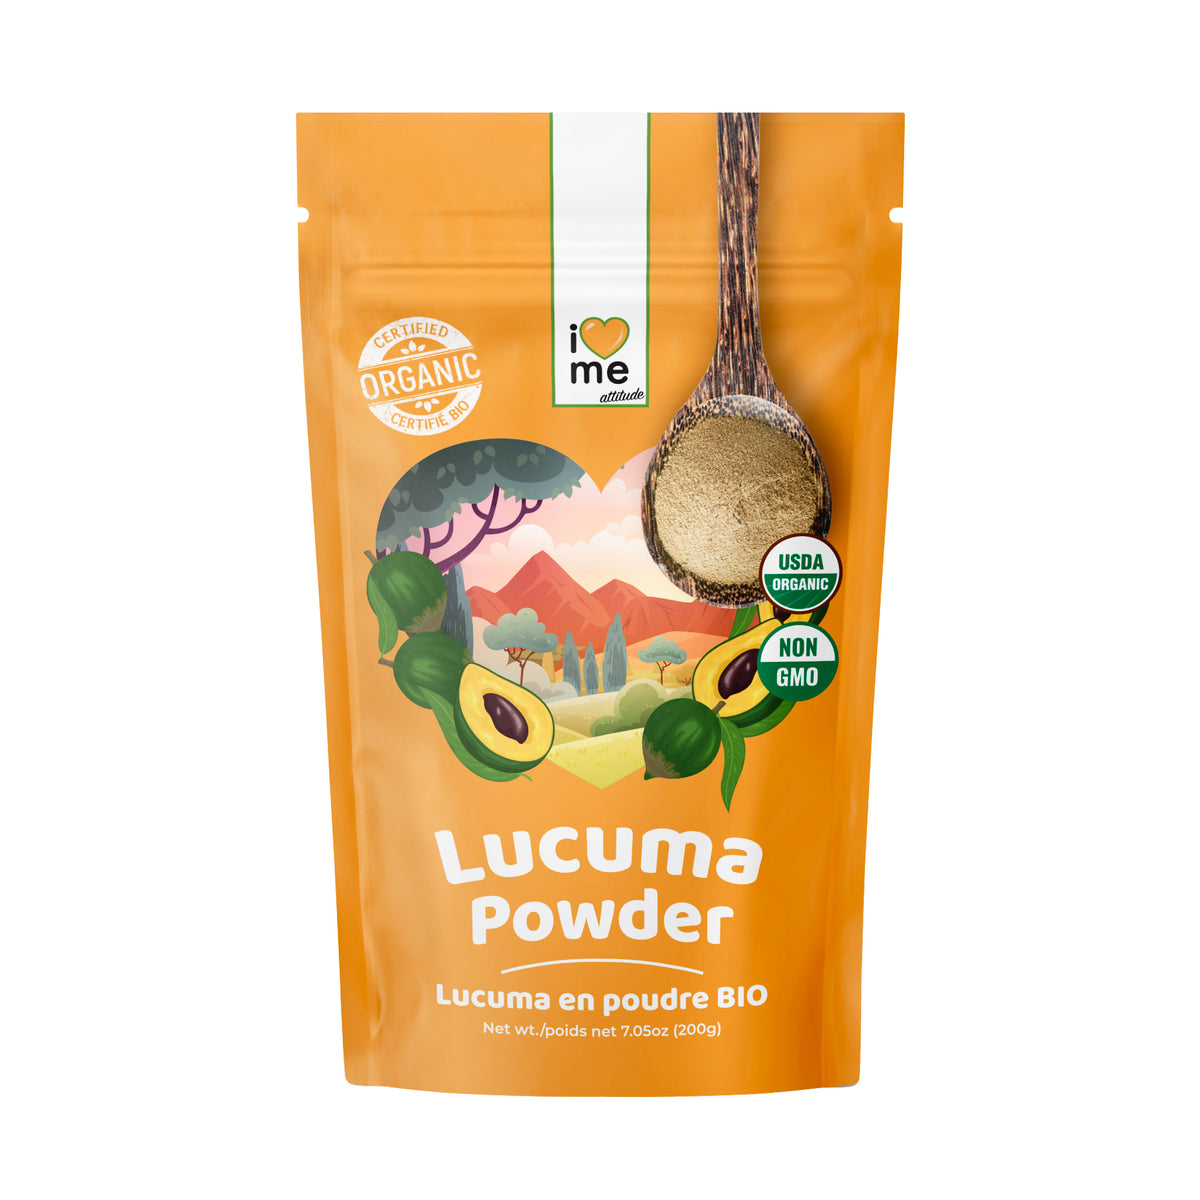 Organic PlantBased Lucuma | Superfood Powder LOVE – attitude ILOVEMEattitude I ME